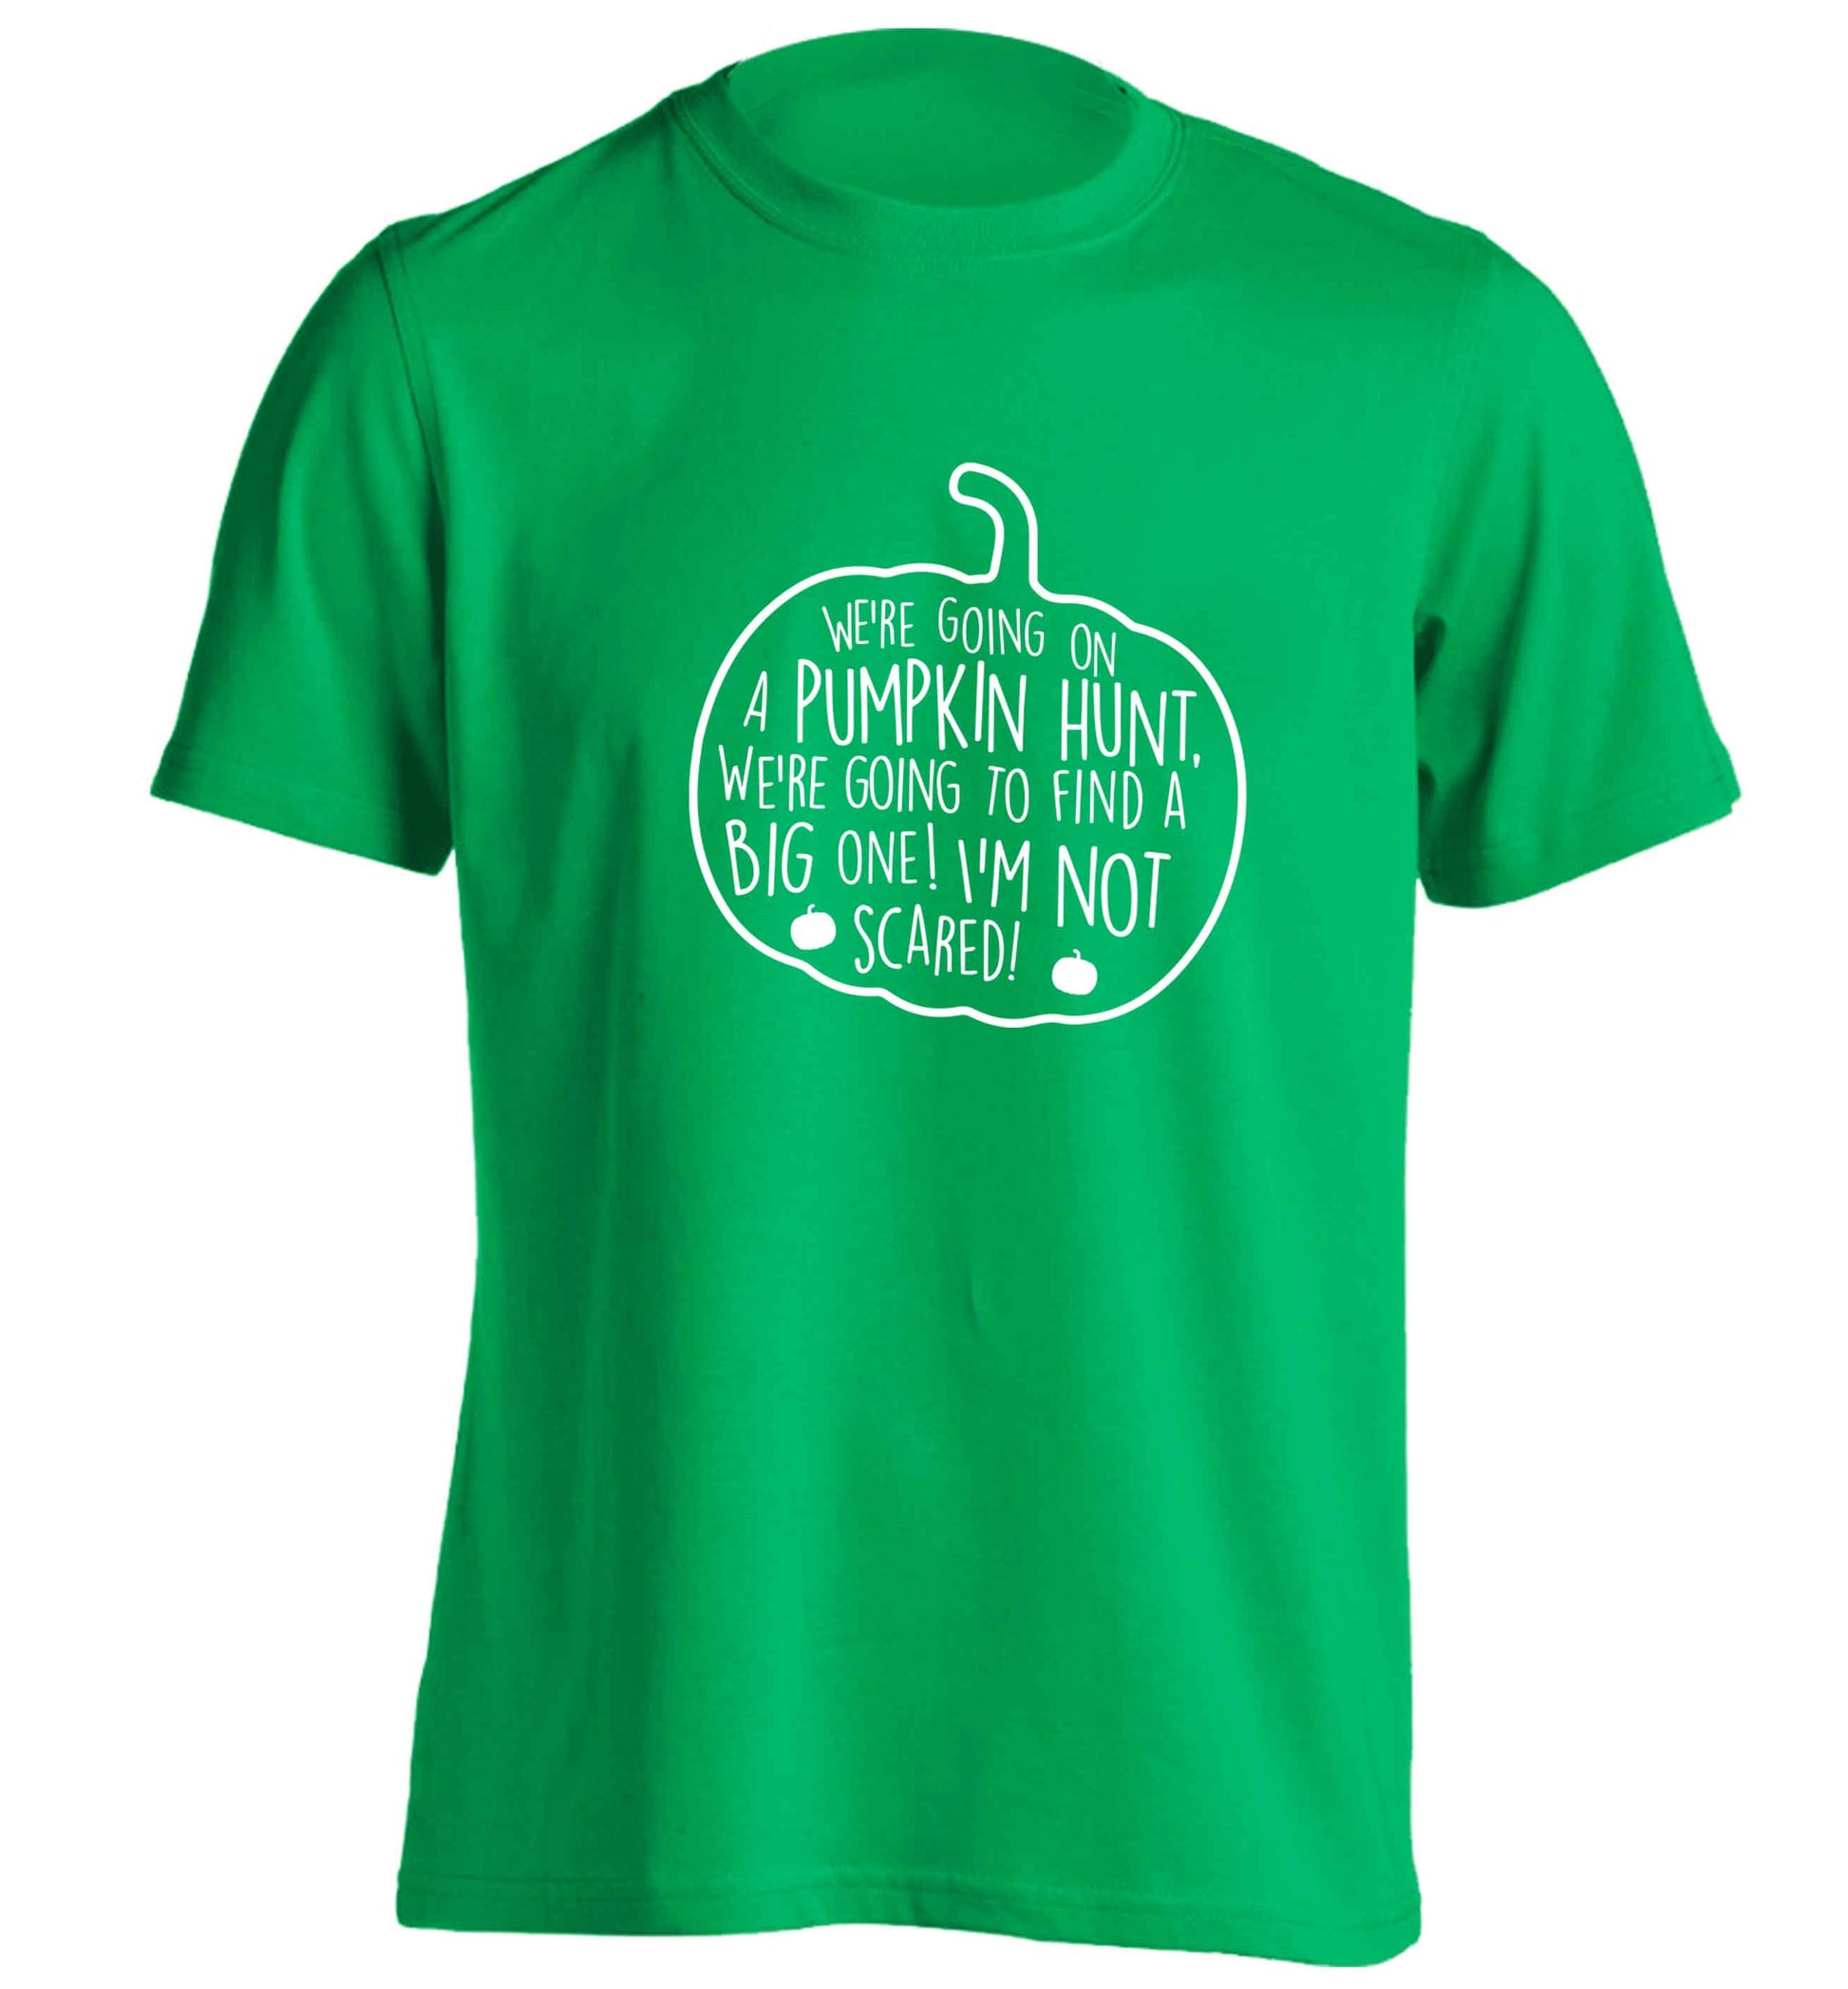 We're going on a pumpkin hunt adults unisex green Tshirt 2XL